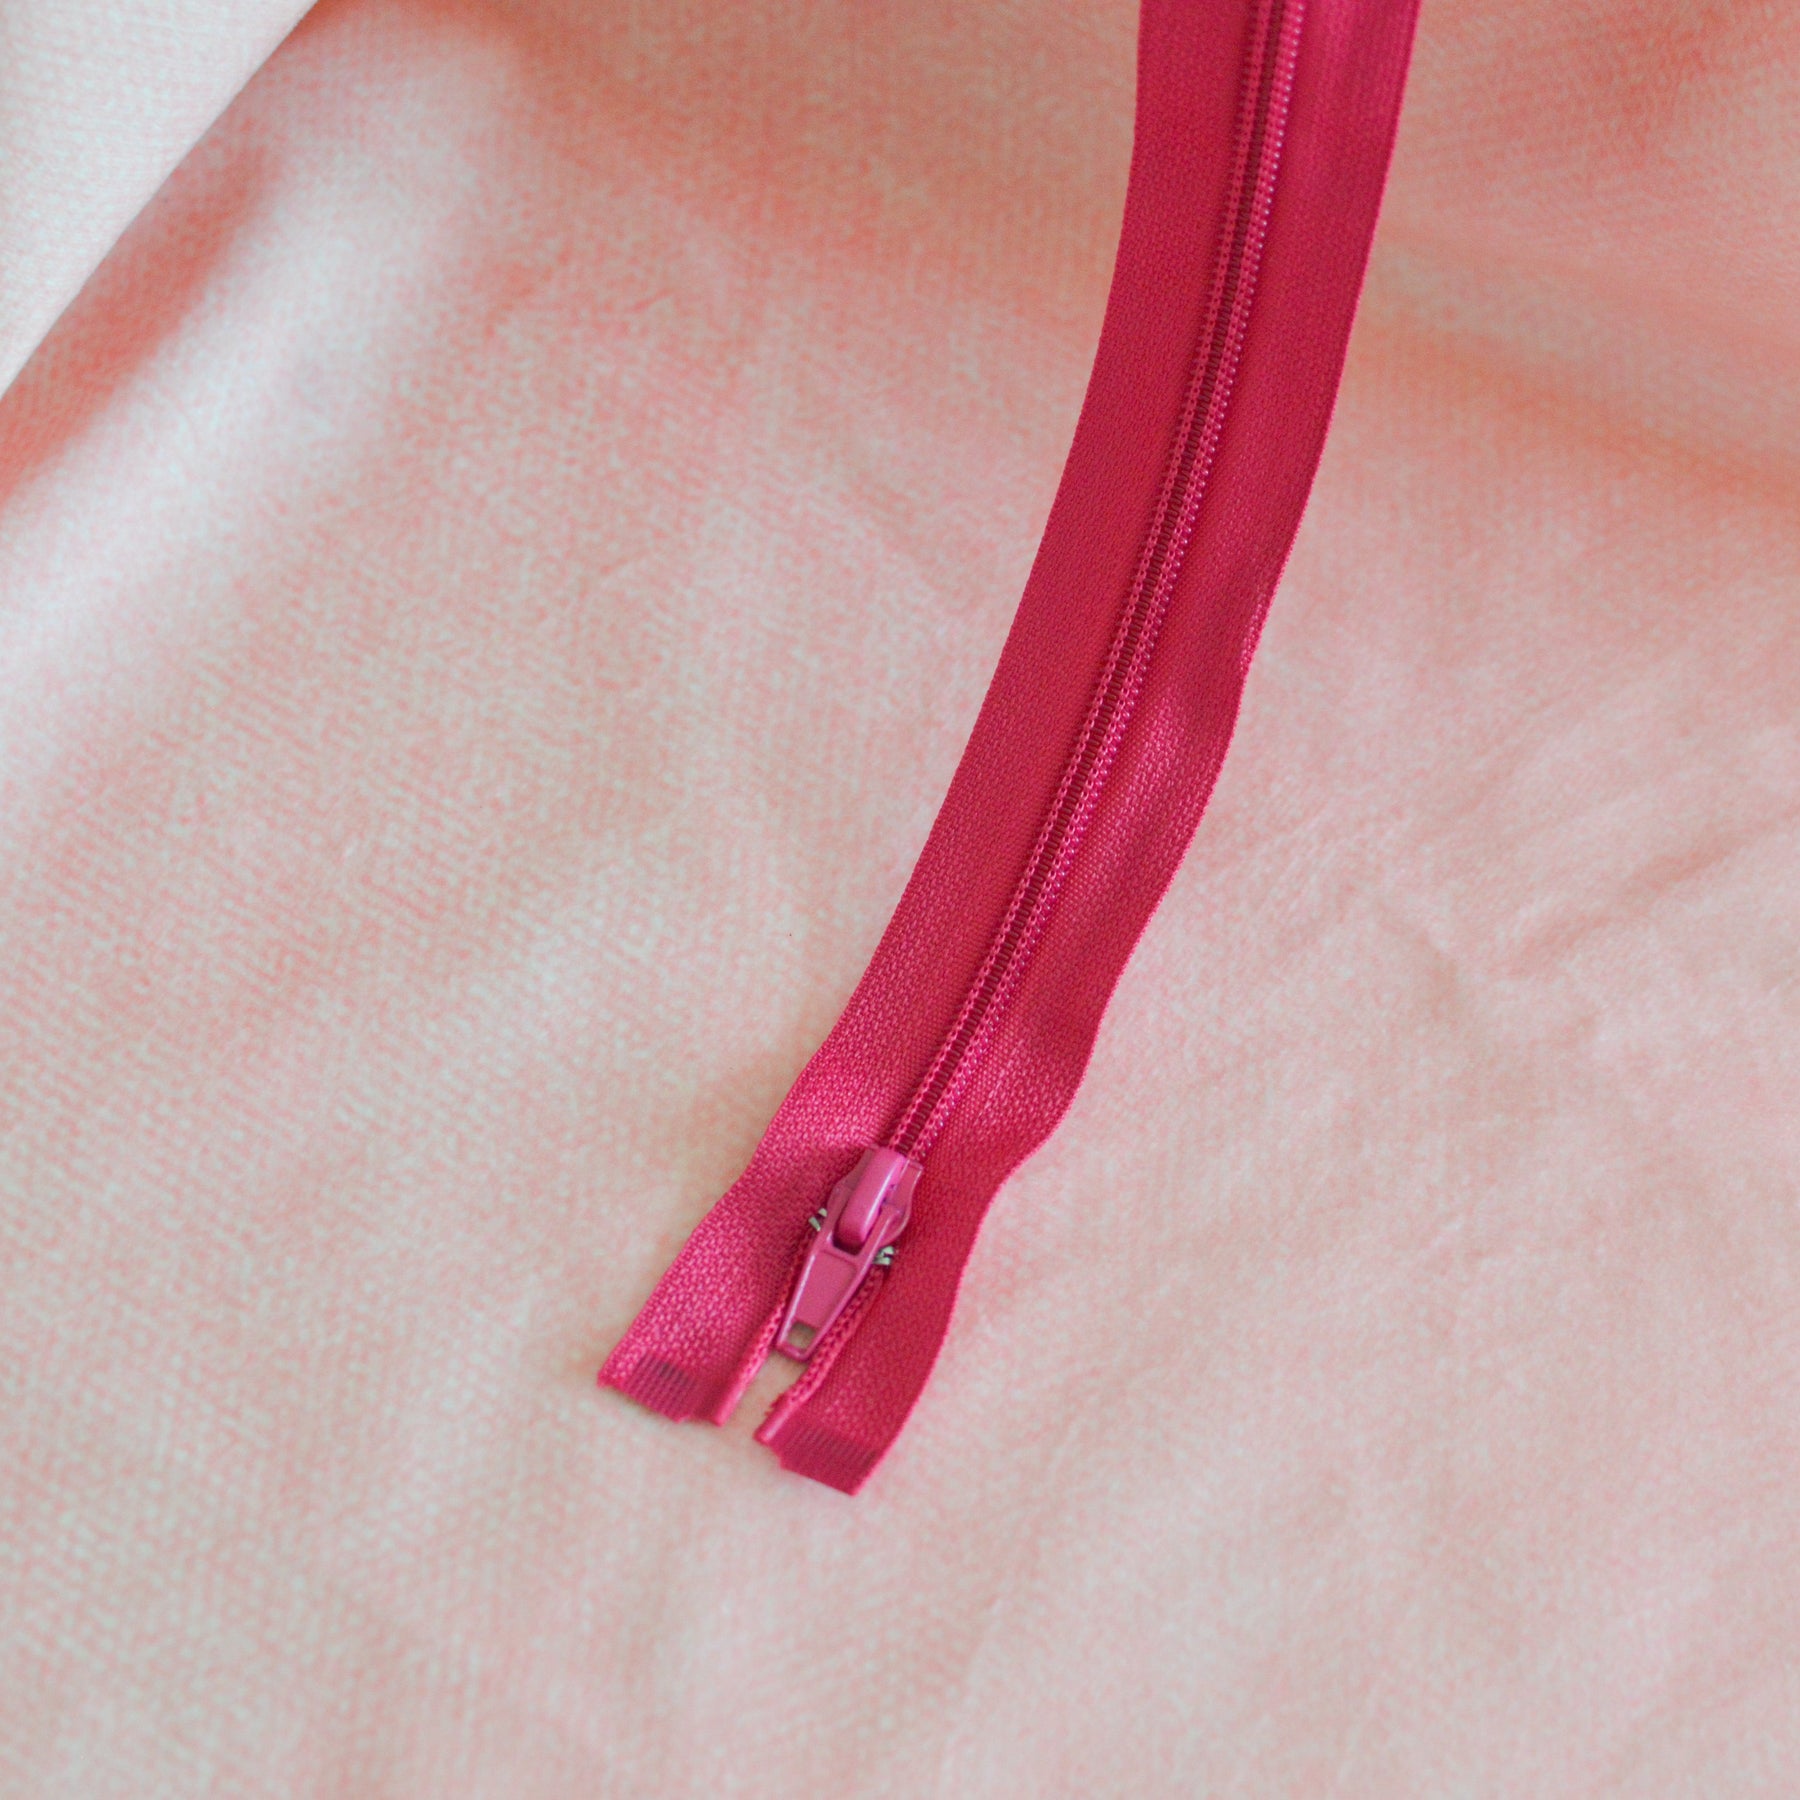 Jacken Reißverschluss 65 cm pink Stück poshpinks